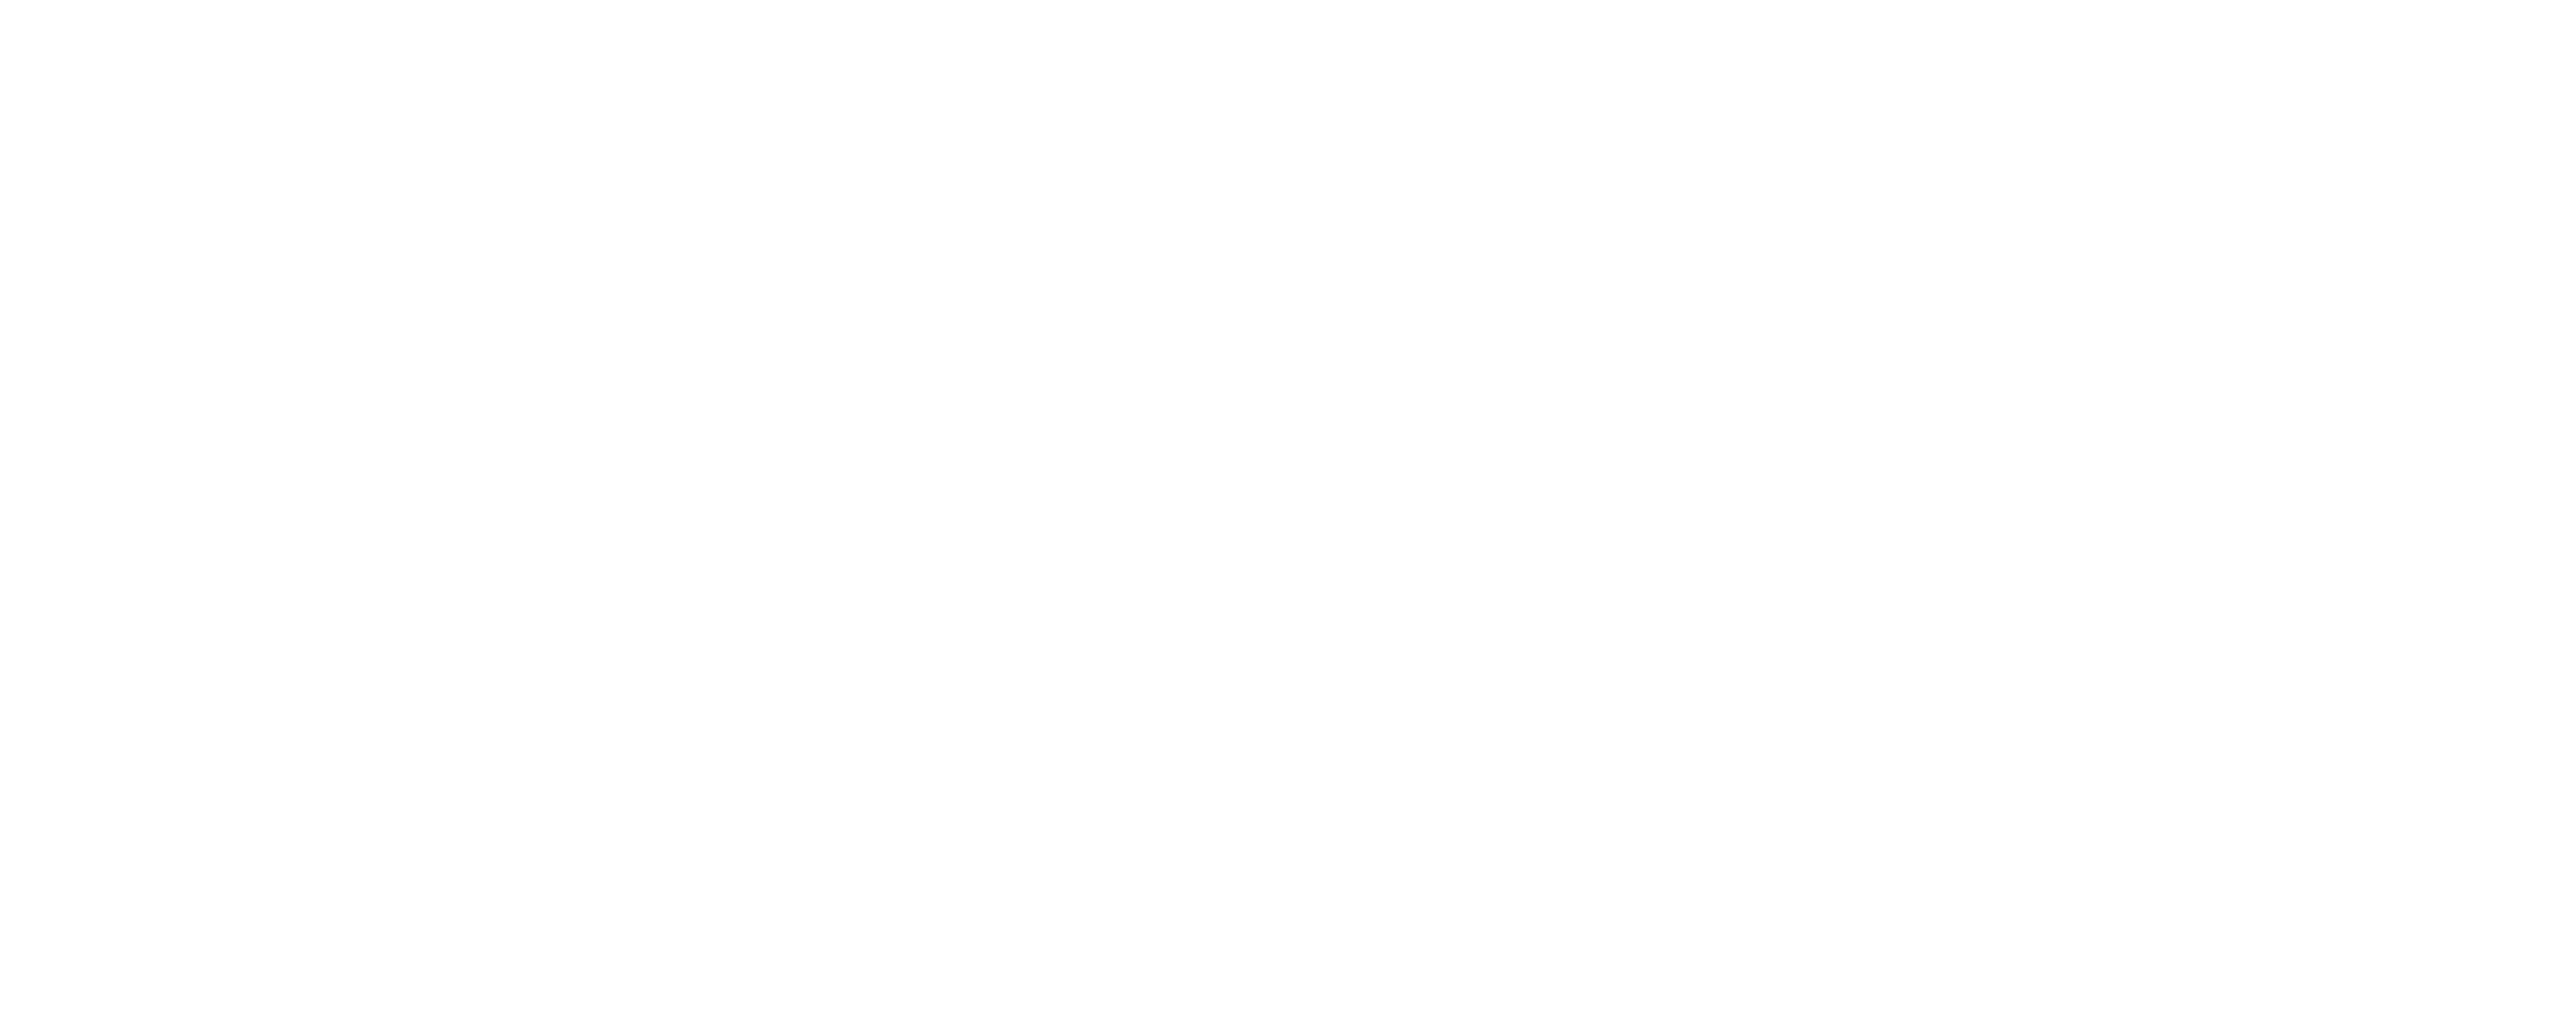 Adopt a River Logo